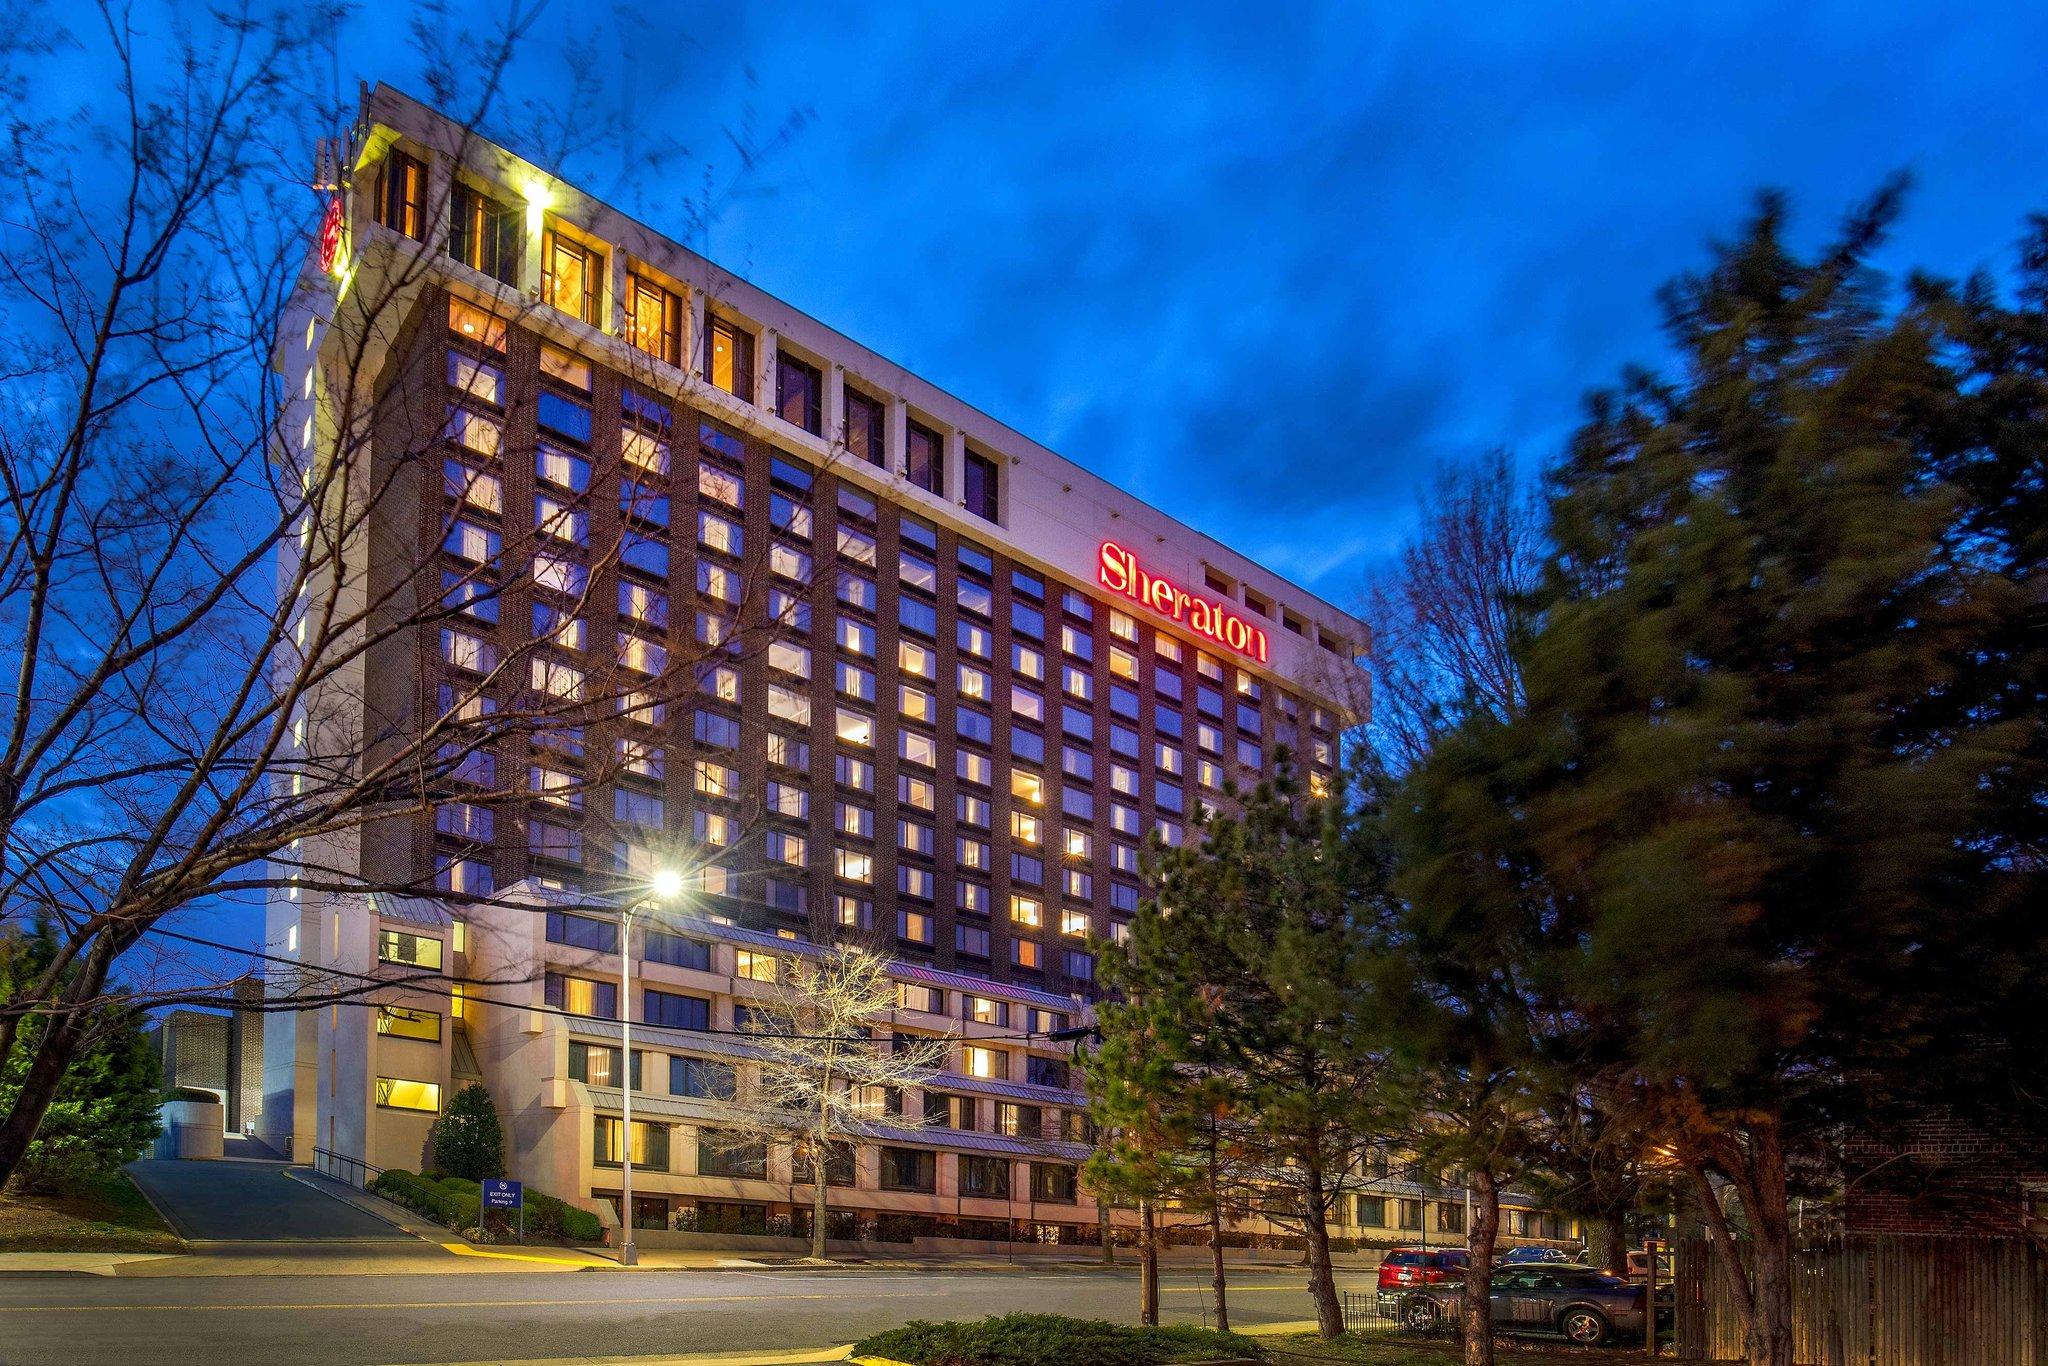 Sheraton Pentagon City Hotel in Arlington, VA